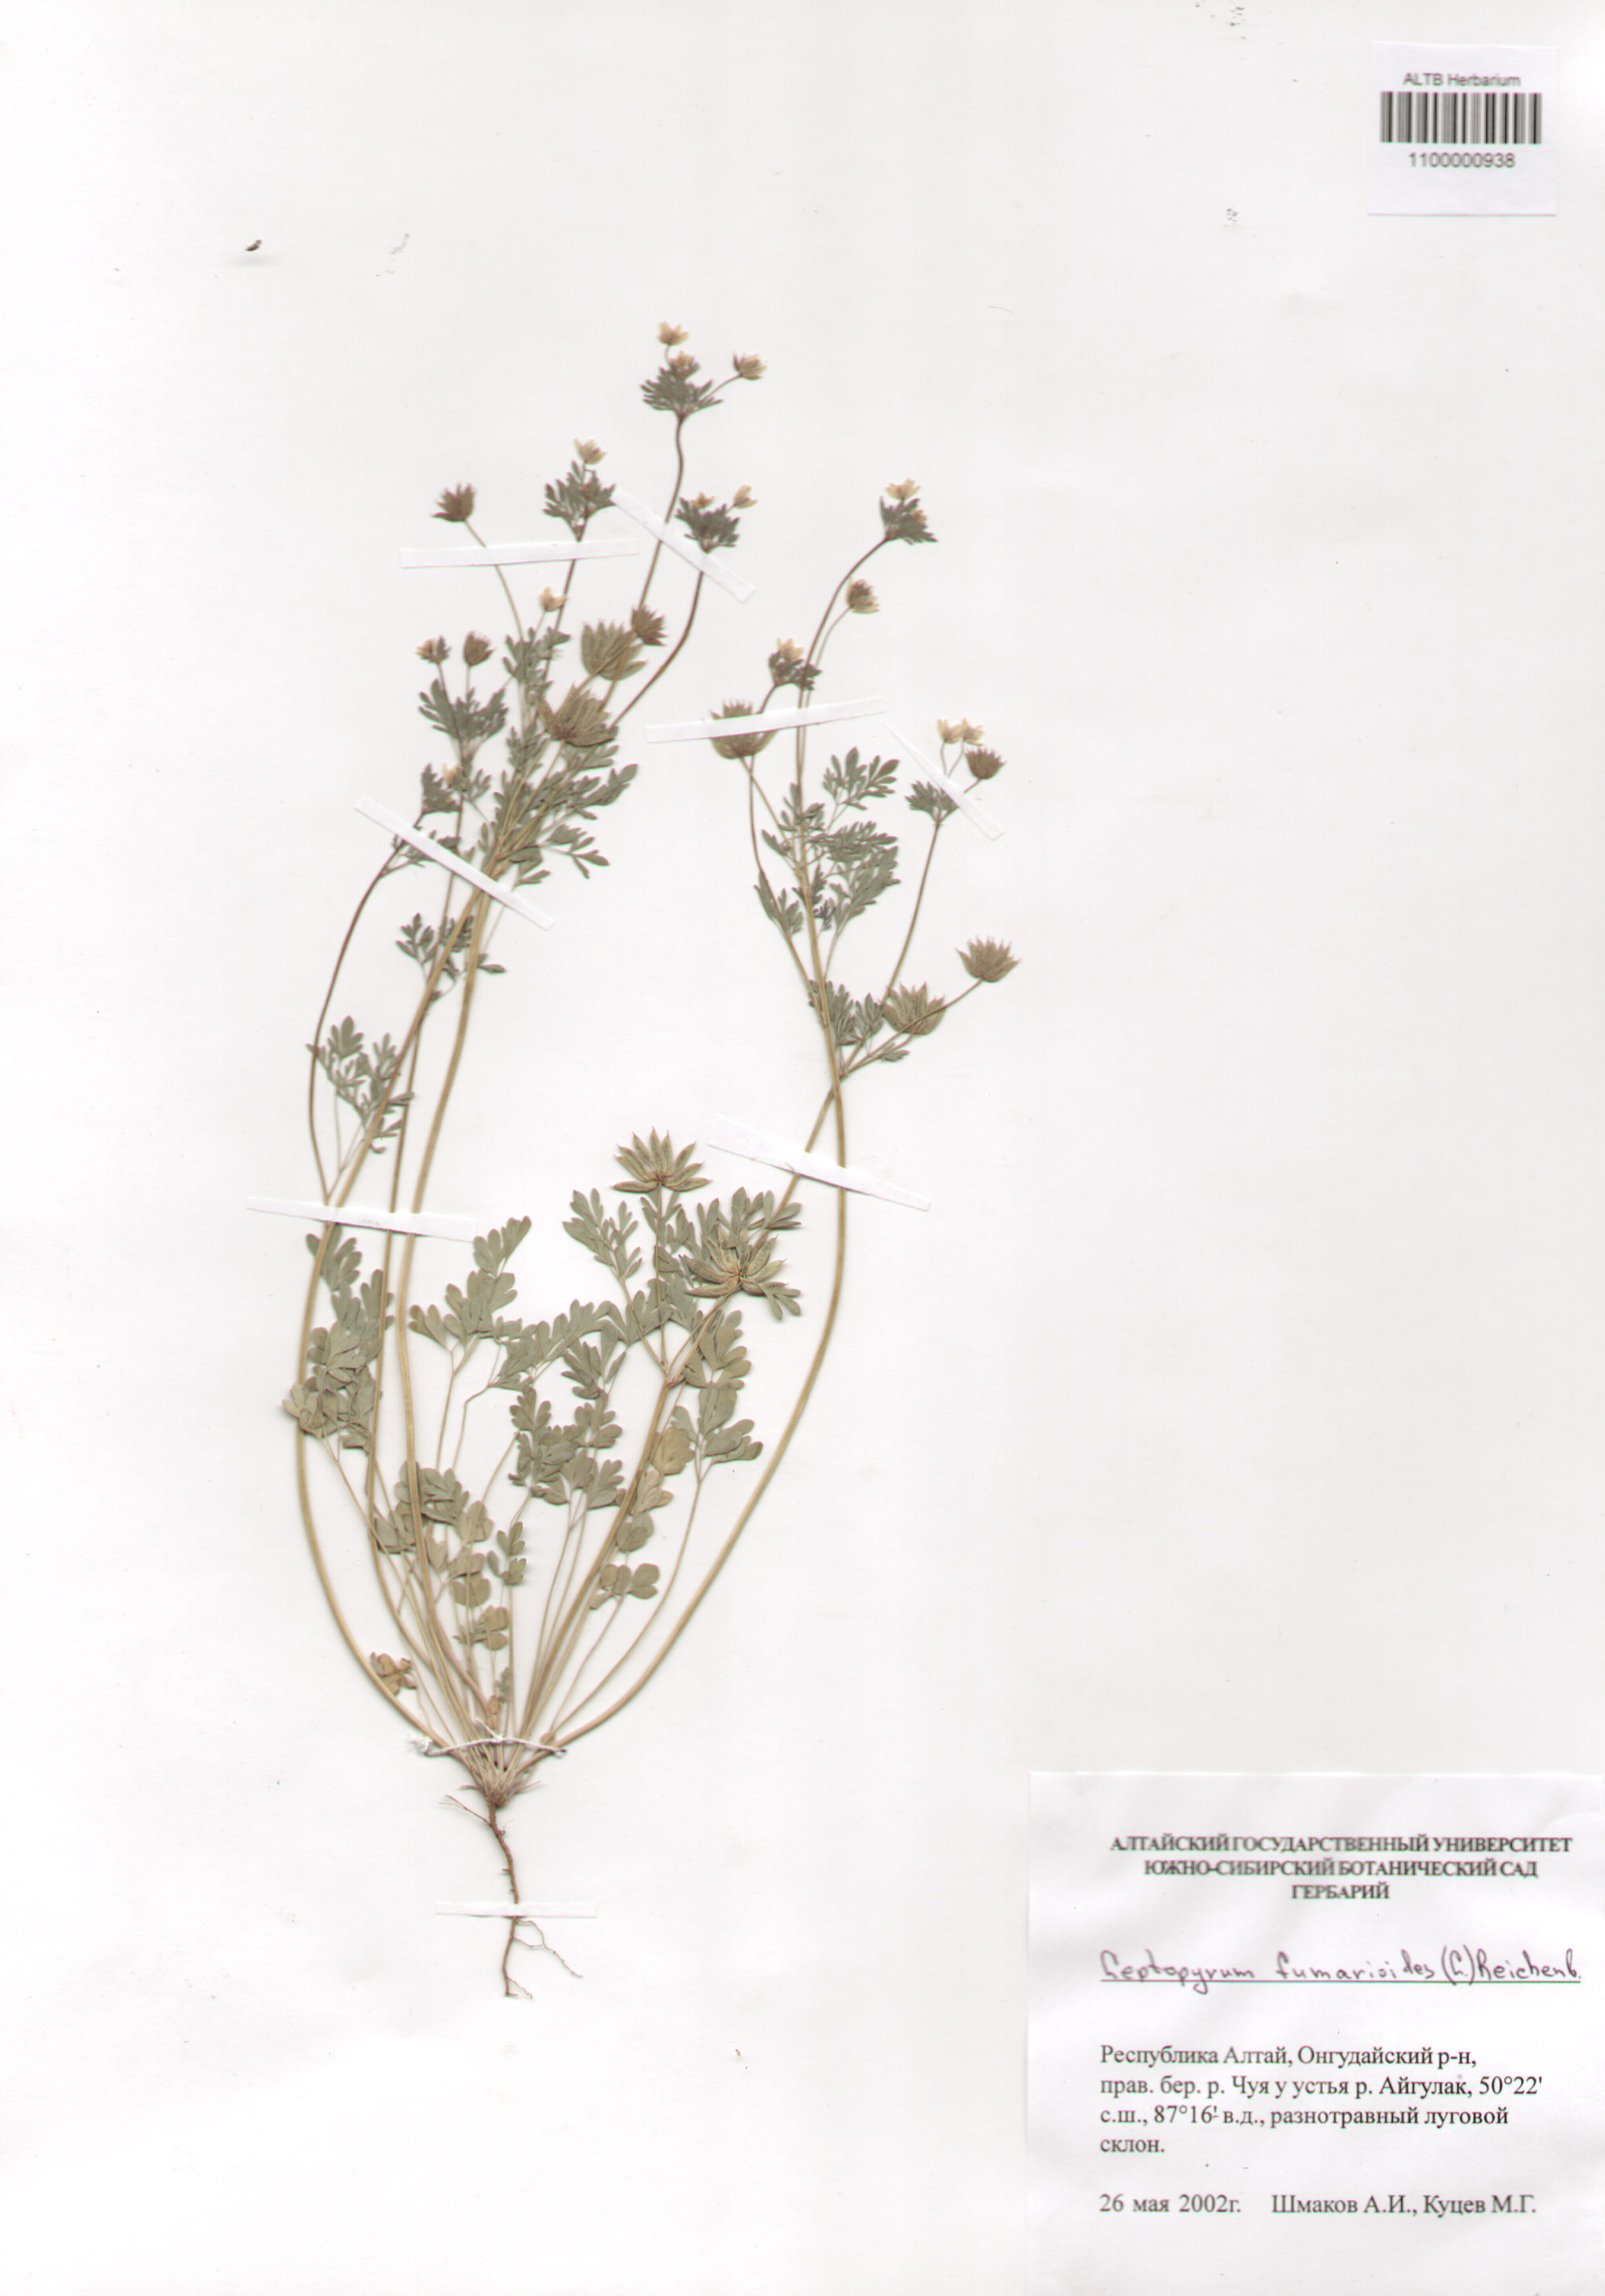 Fumariaceae,Leptopyrum fumarioides (L.) Reichenb.